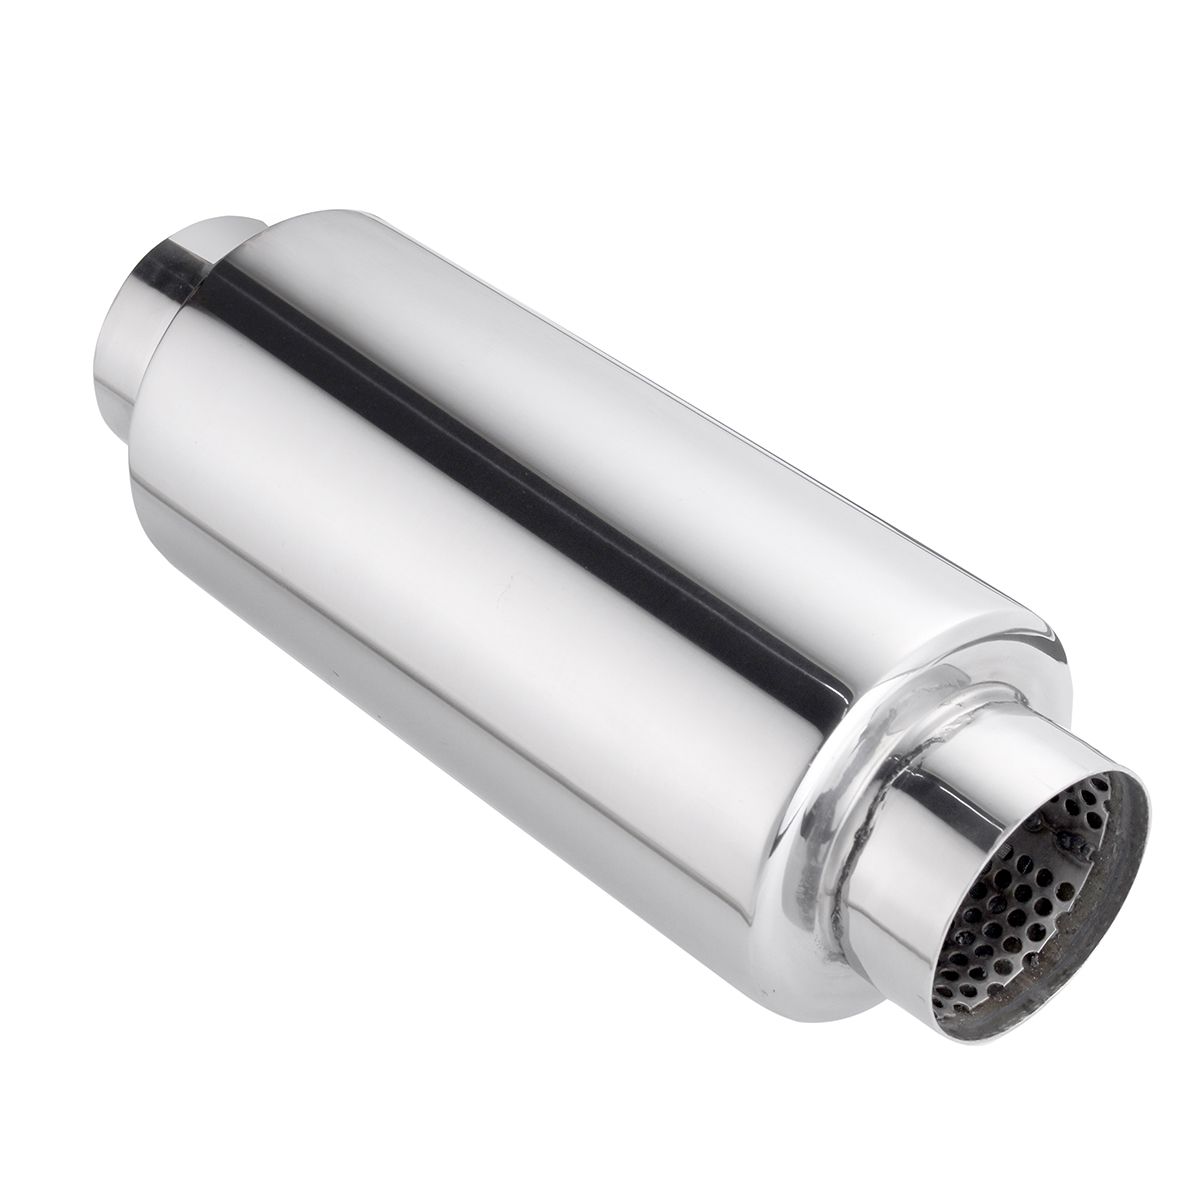 Universal-Exhaust-Muffler-Resonator-304-Stainless-Steel-25-Inch-Inelt-25-Inch-Outlet-1353243